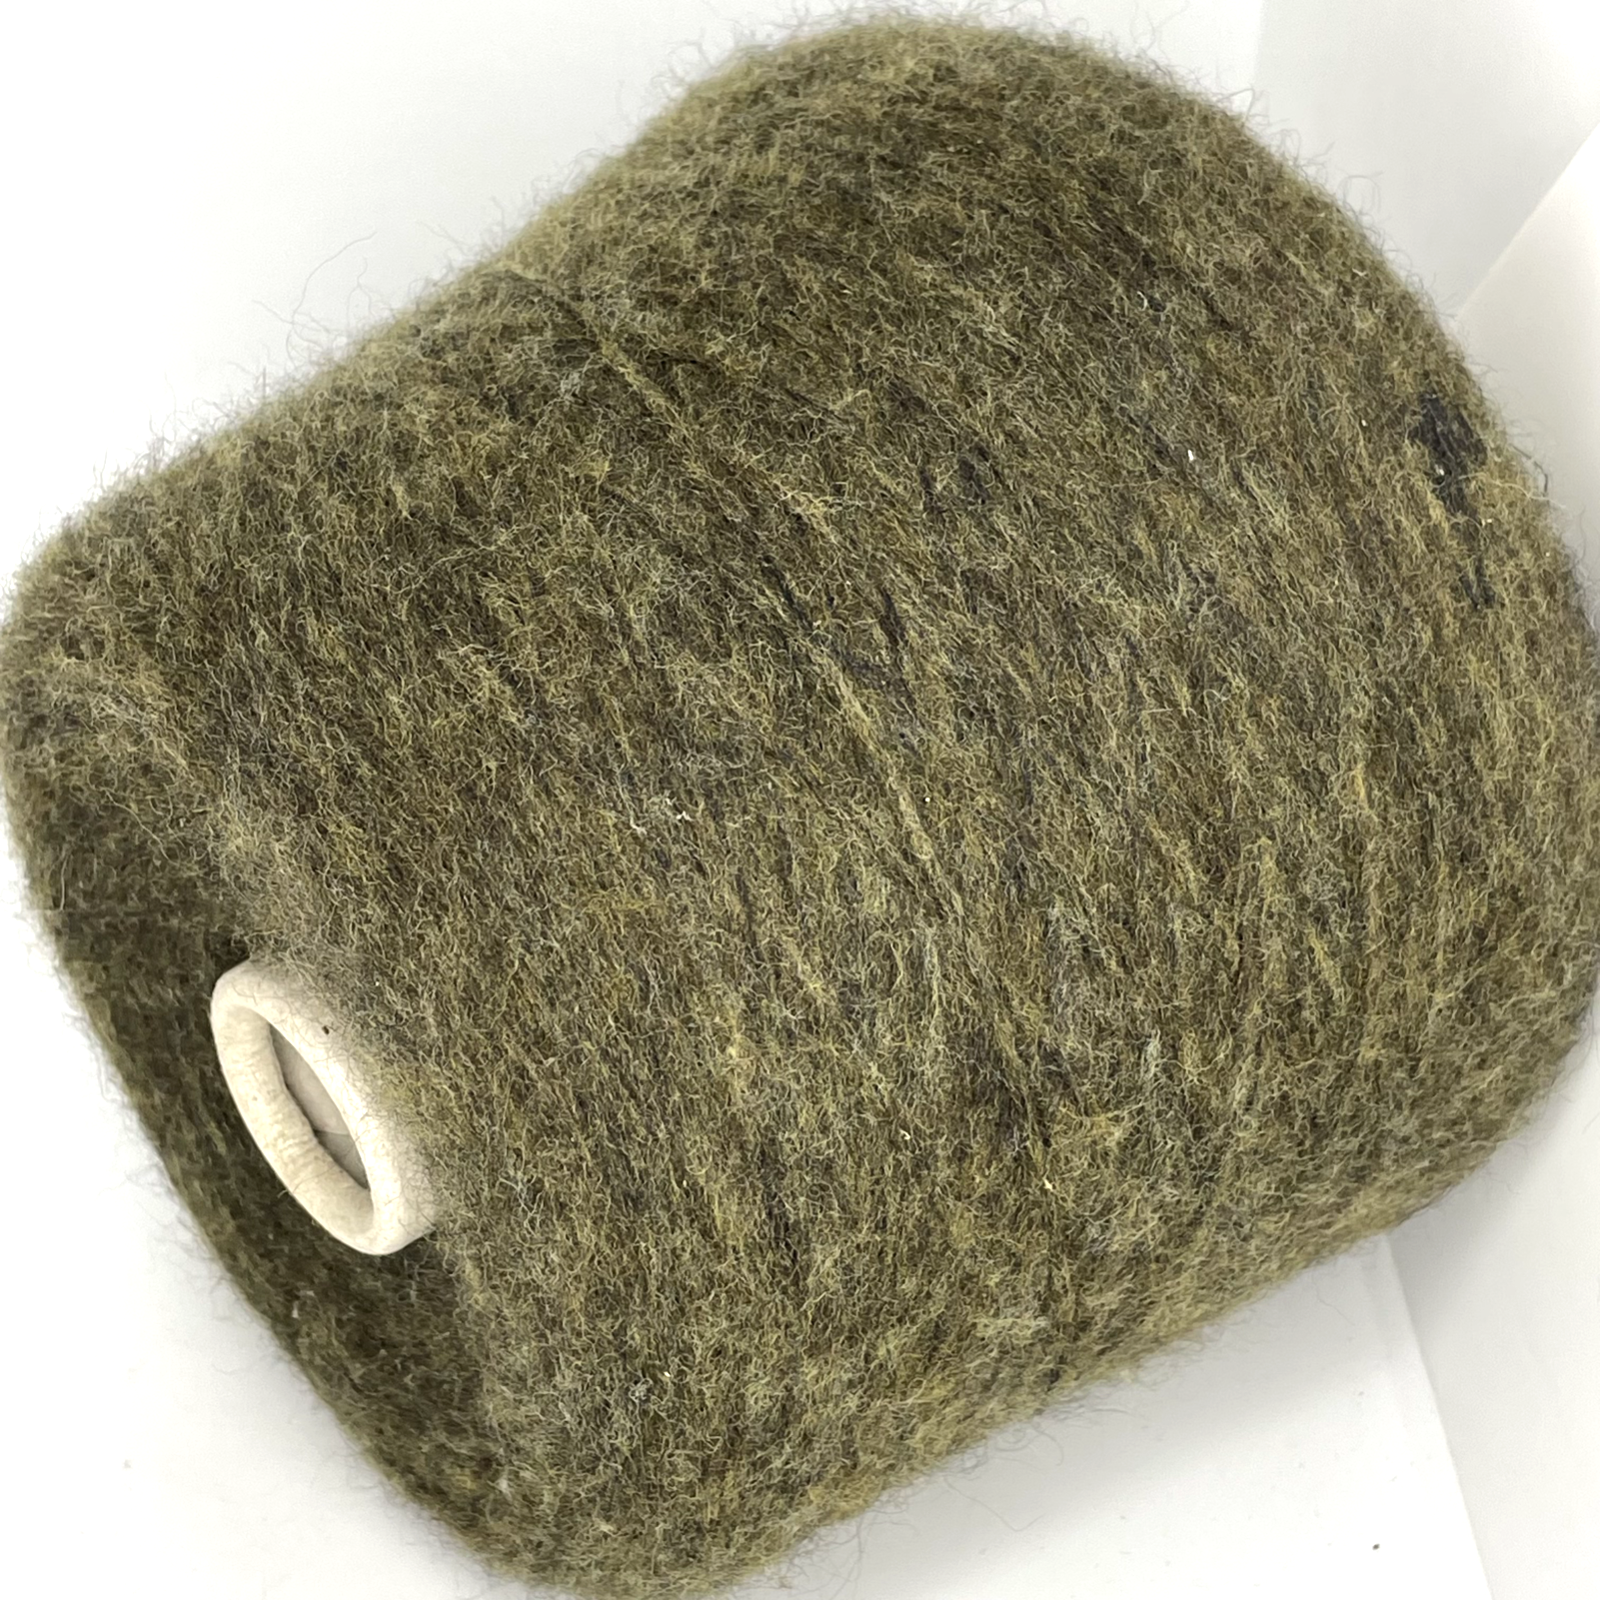 Wool Blend Yarn Selection at